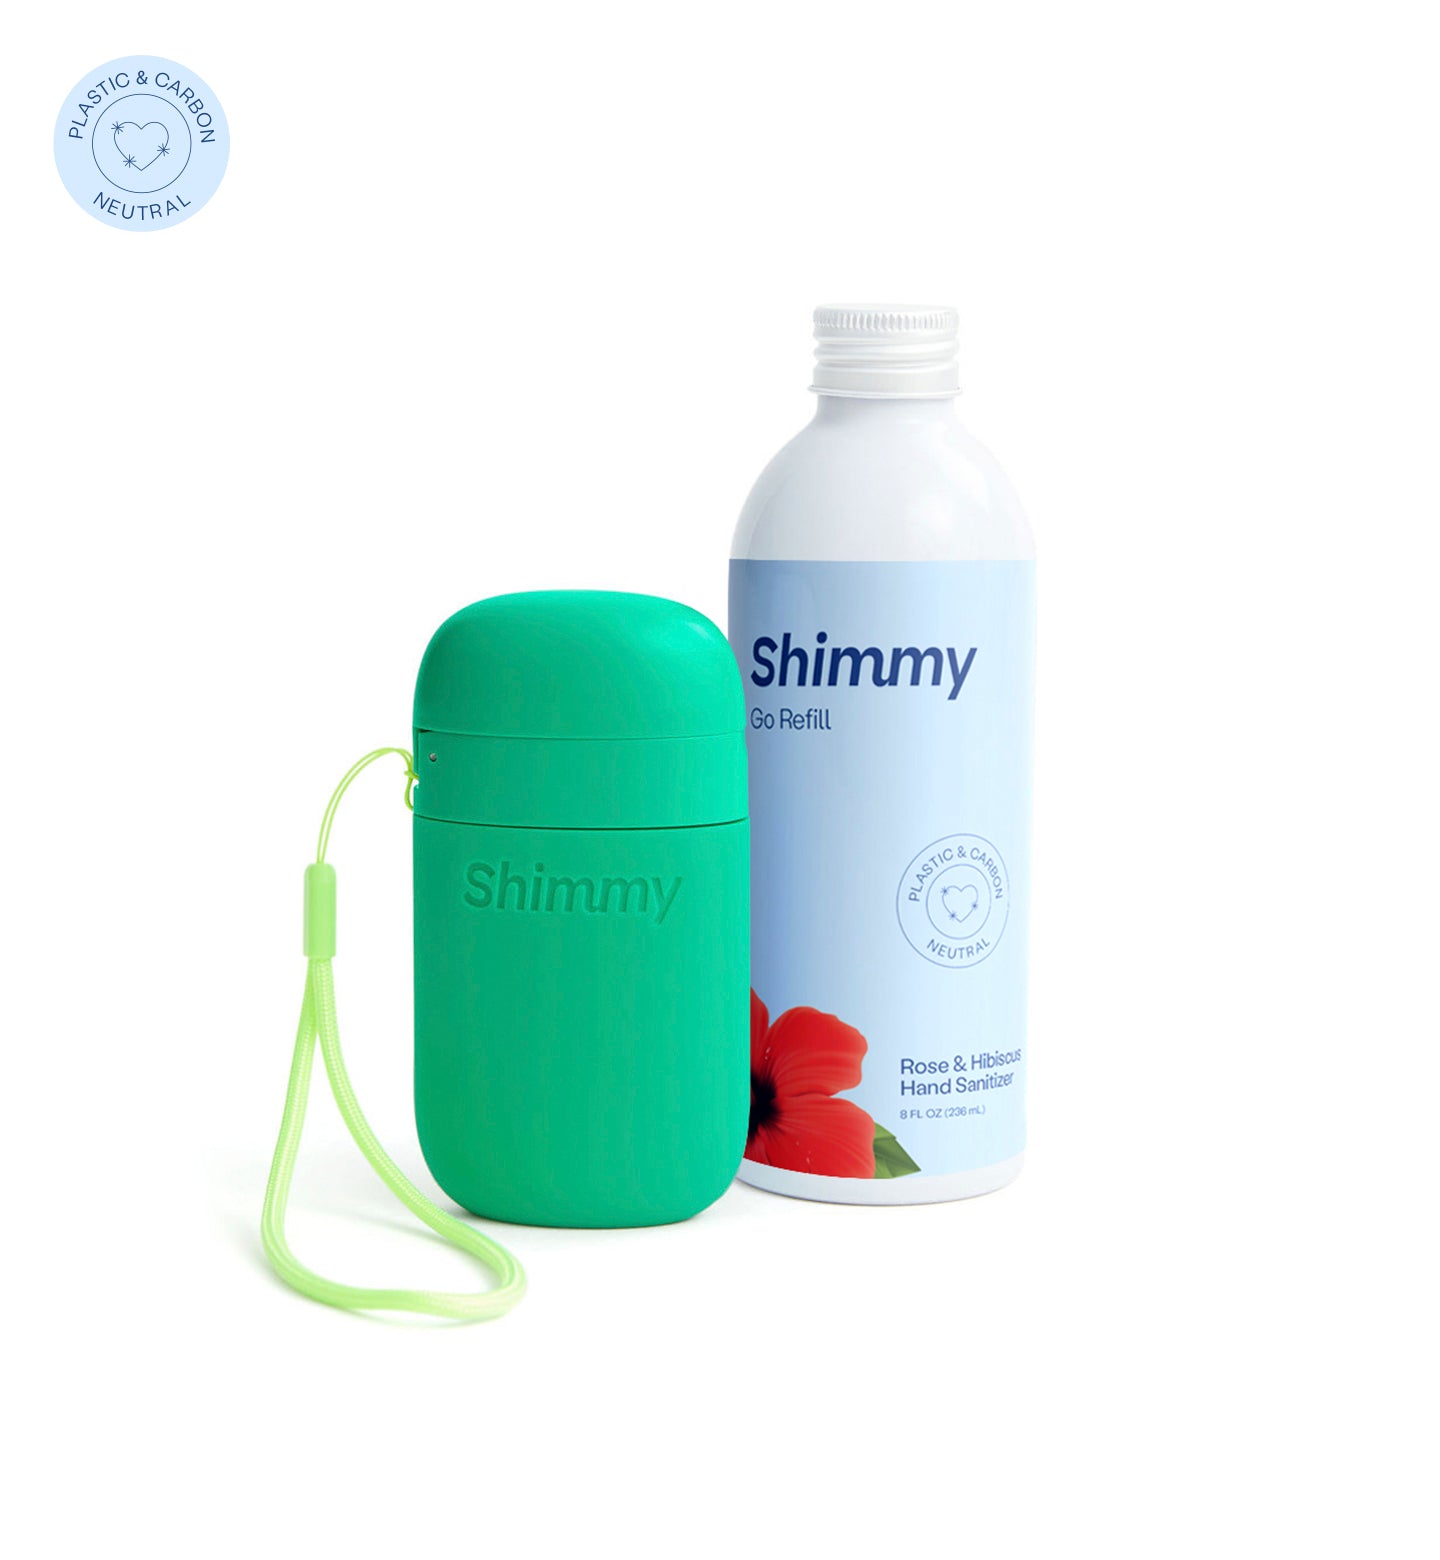 Shimmy Go Portable Hand Sanitizer Dispenser Kelly Green + Rose  & Hibiscus Hand Sanitizer [40734812405951] - 40734812405951